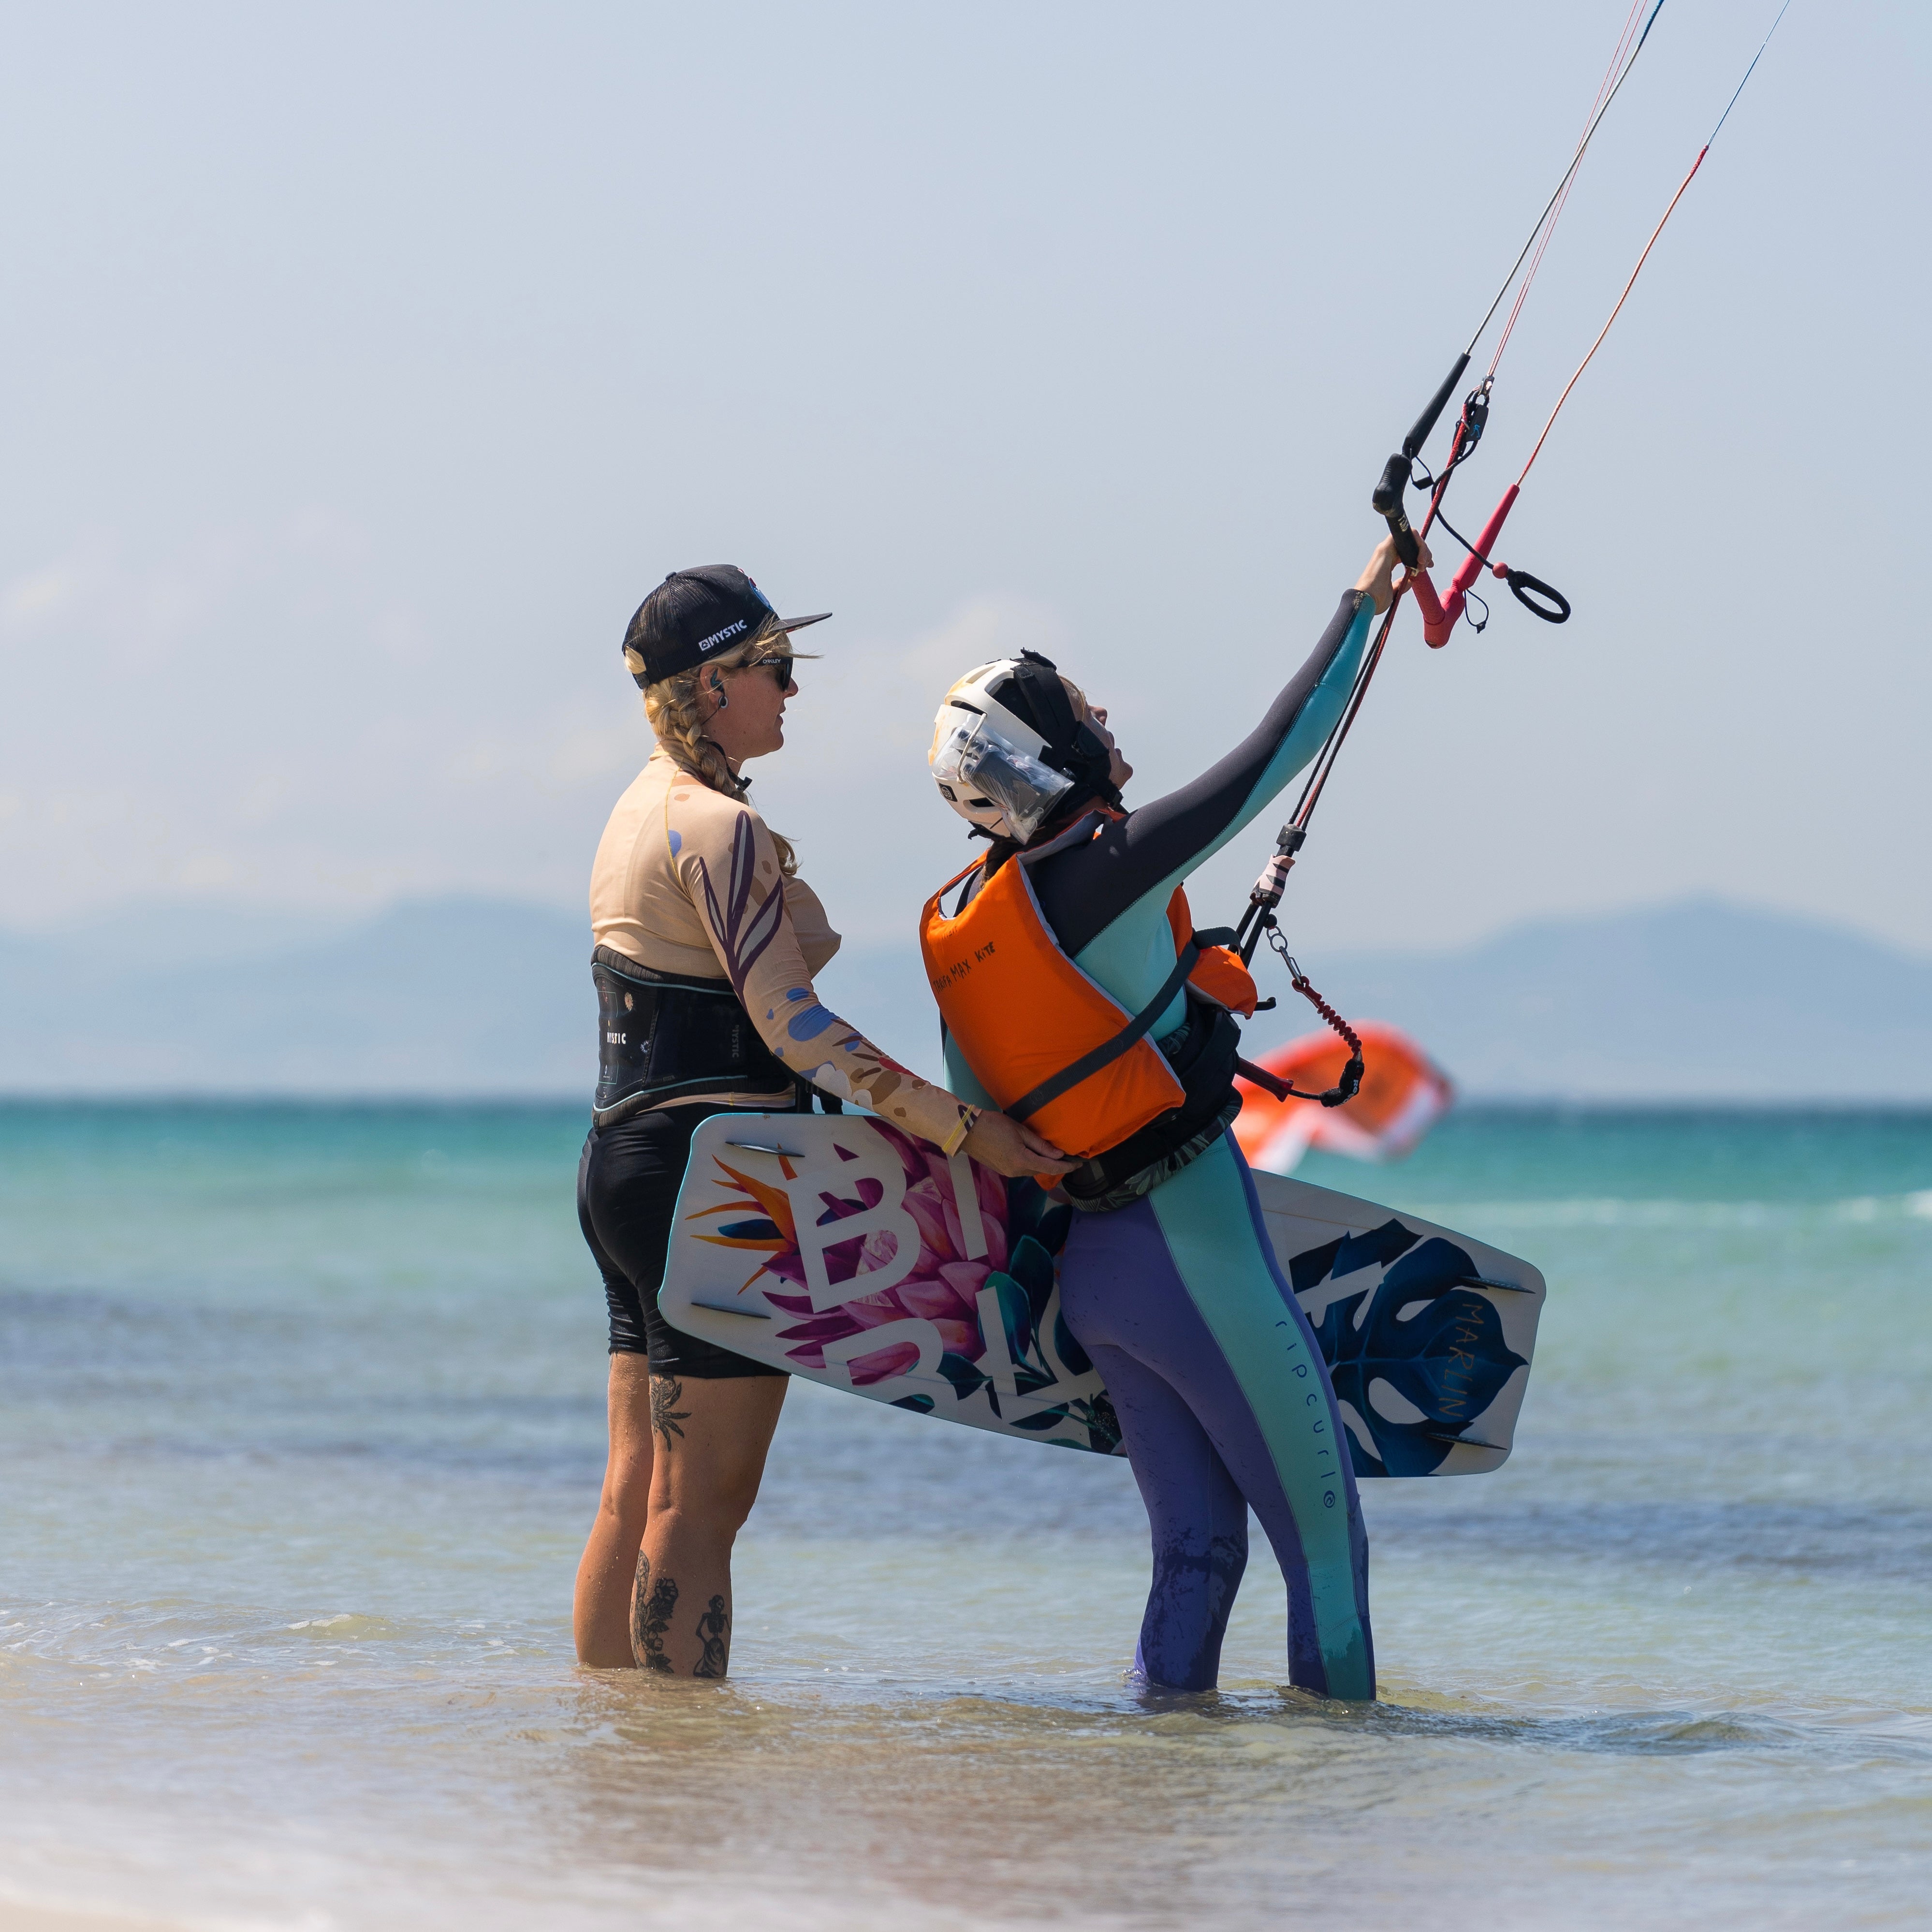 Learning Kitesurfing in Tarifa